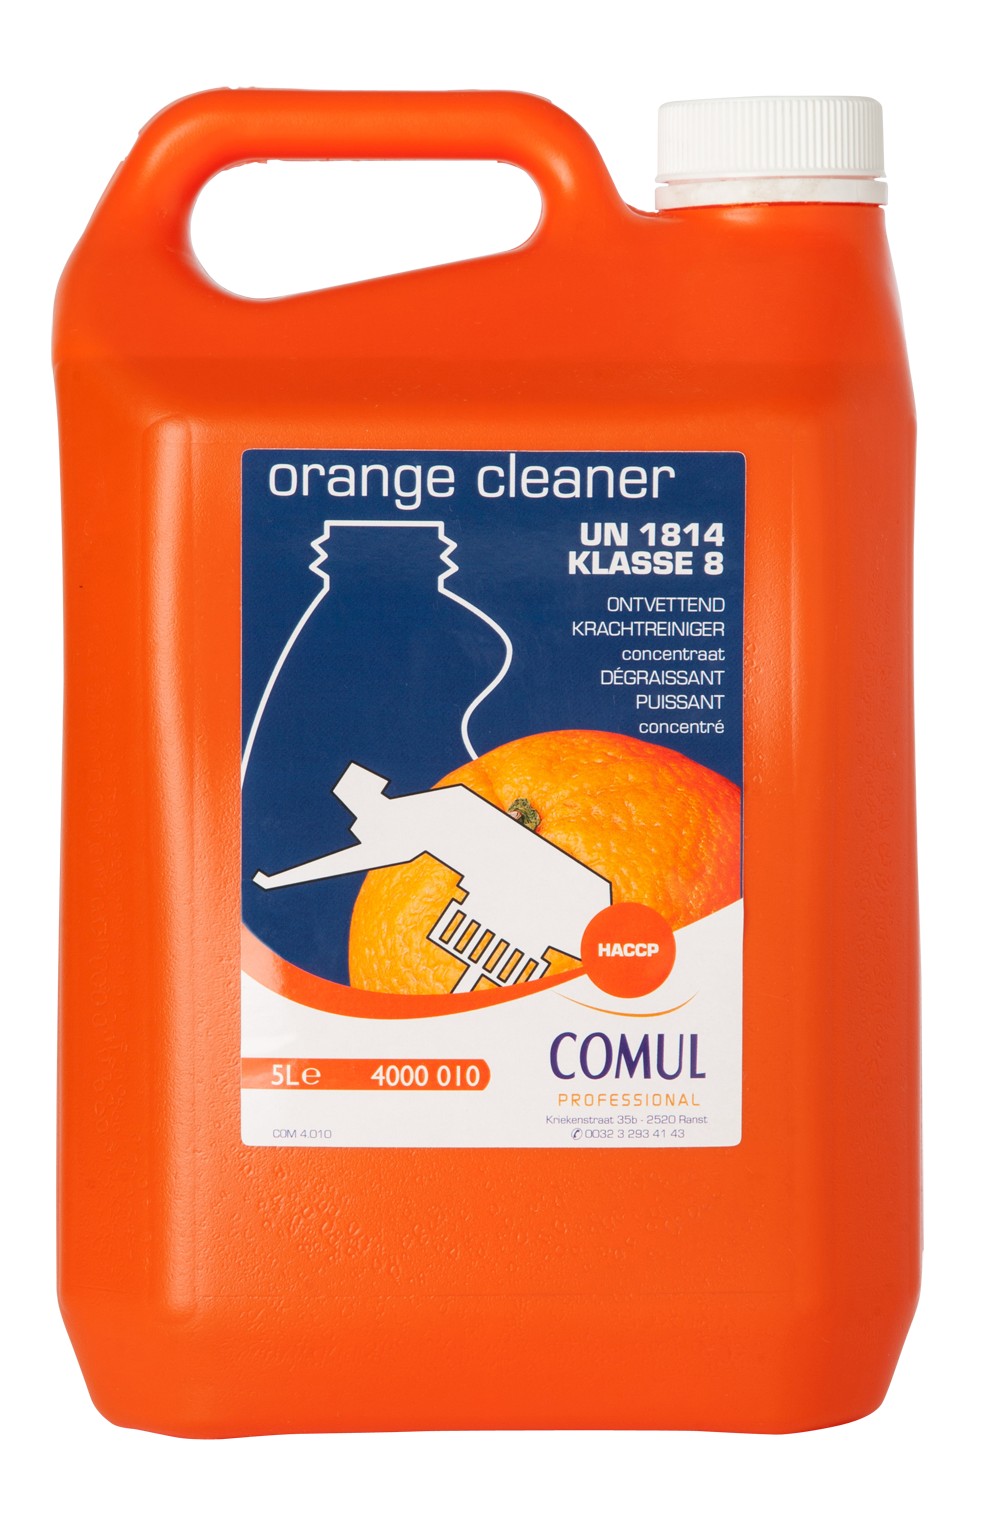 Orange cleaner ontvetter 5l c